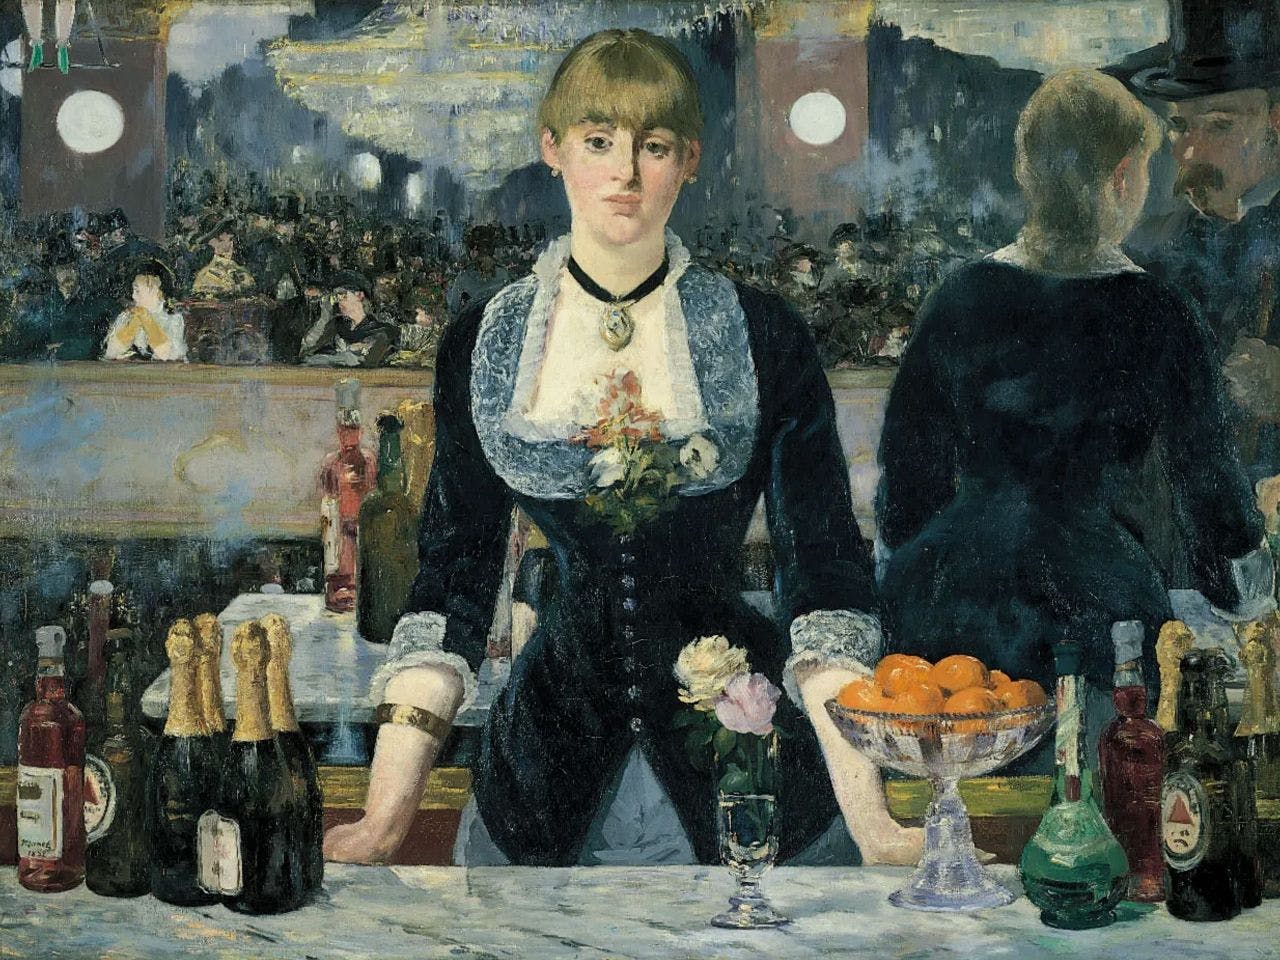 An artwork by Édouard Manet, titled A Bar at the Folies-Bergère, dated 1882